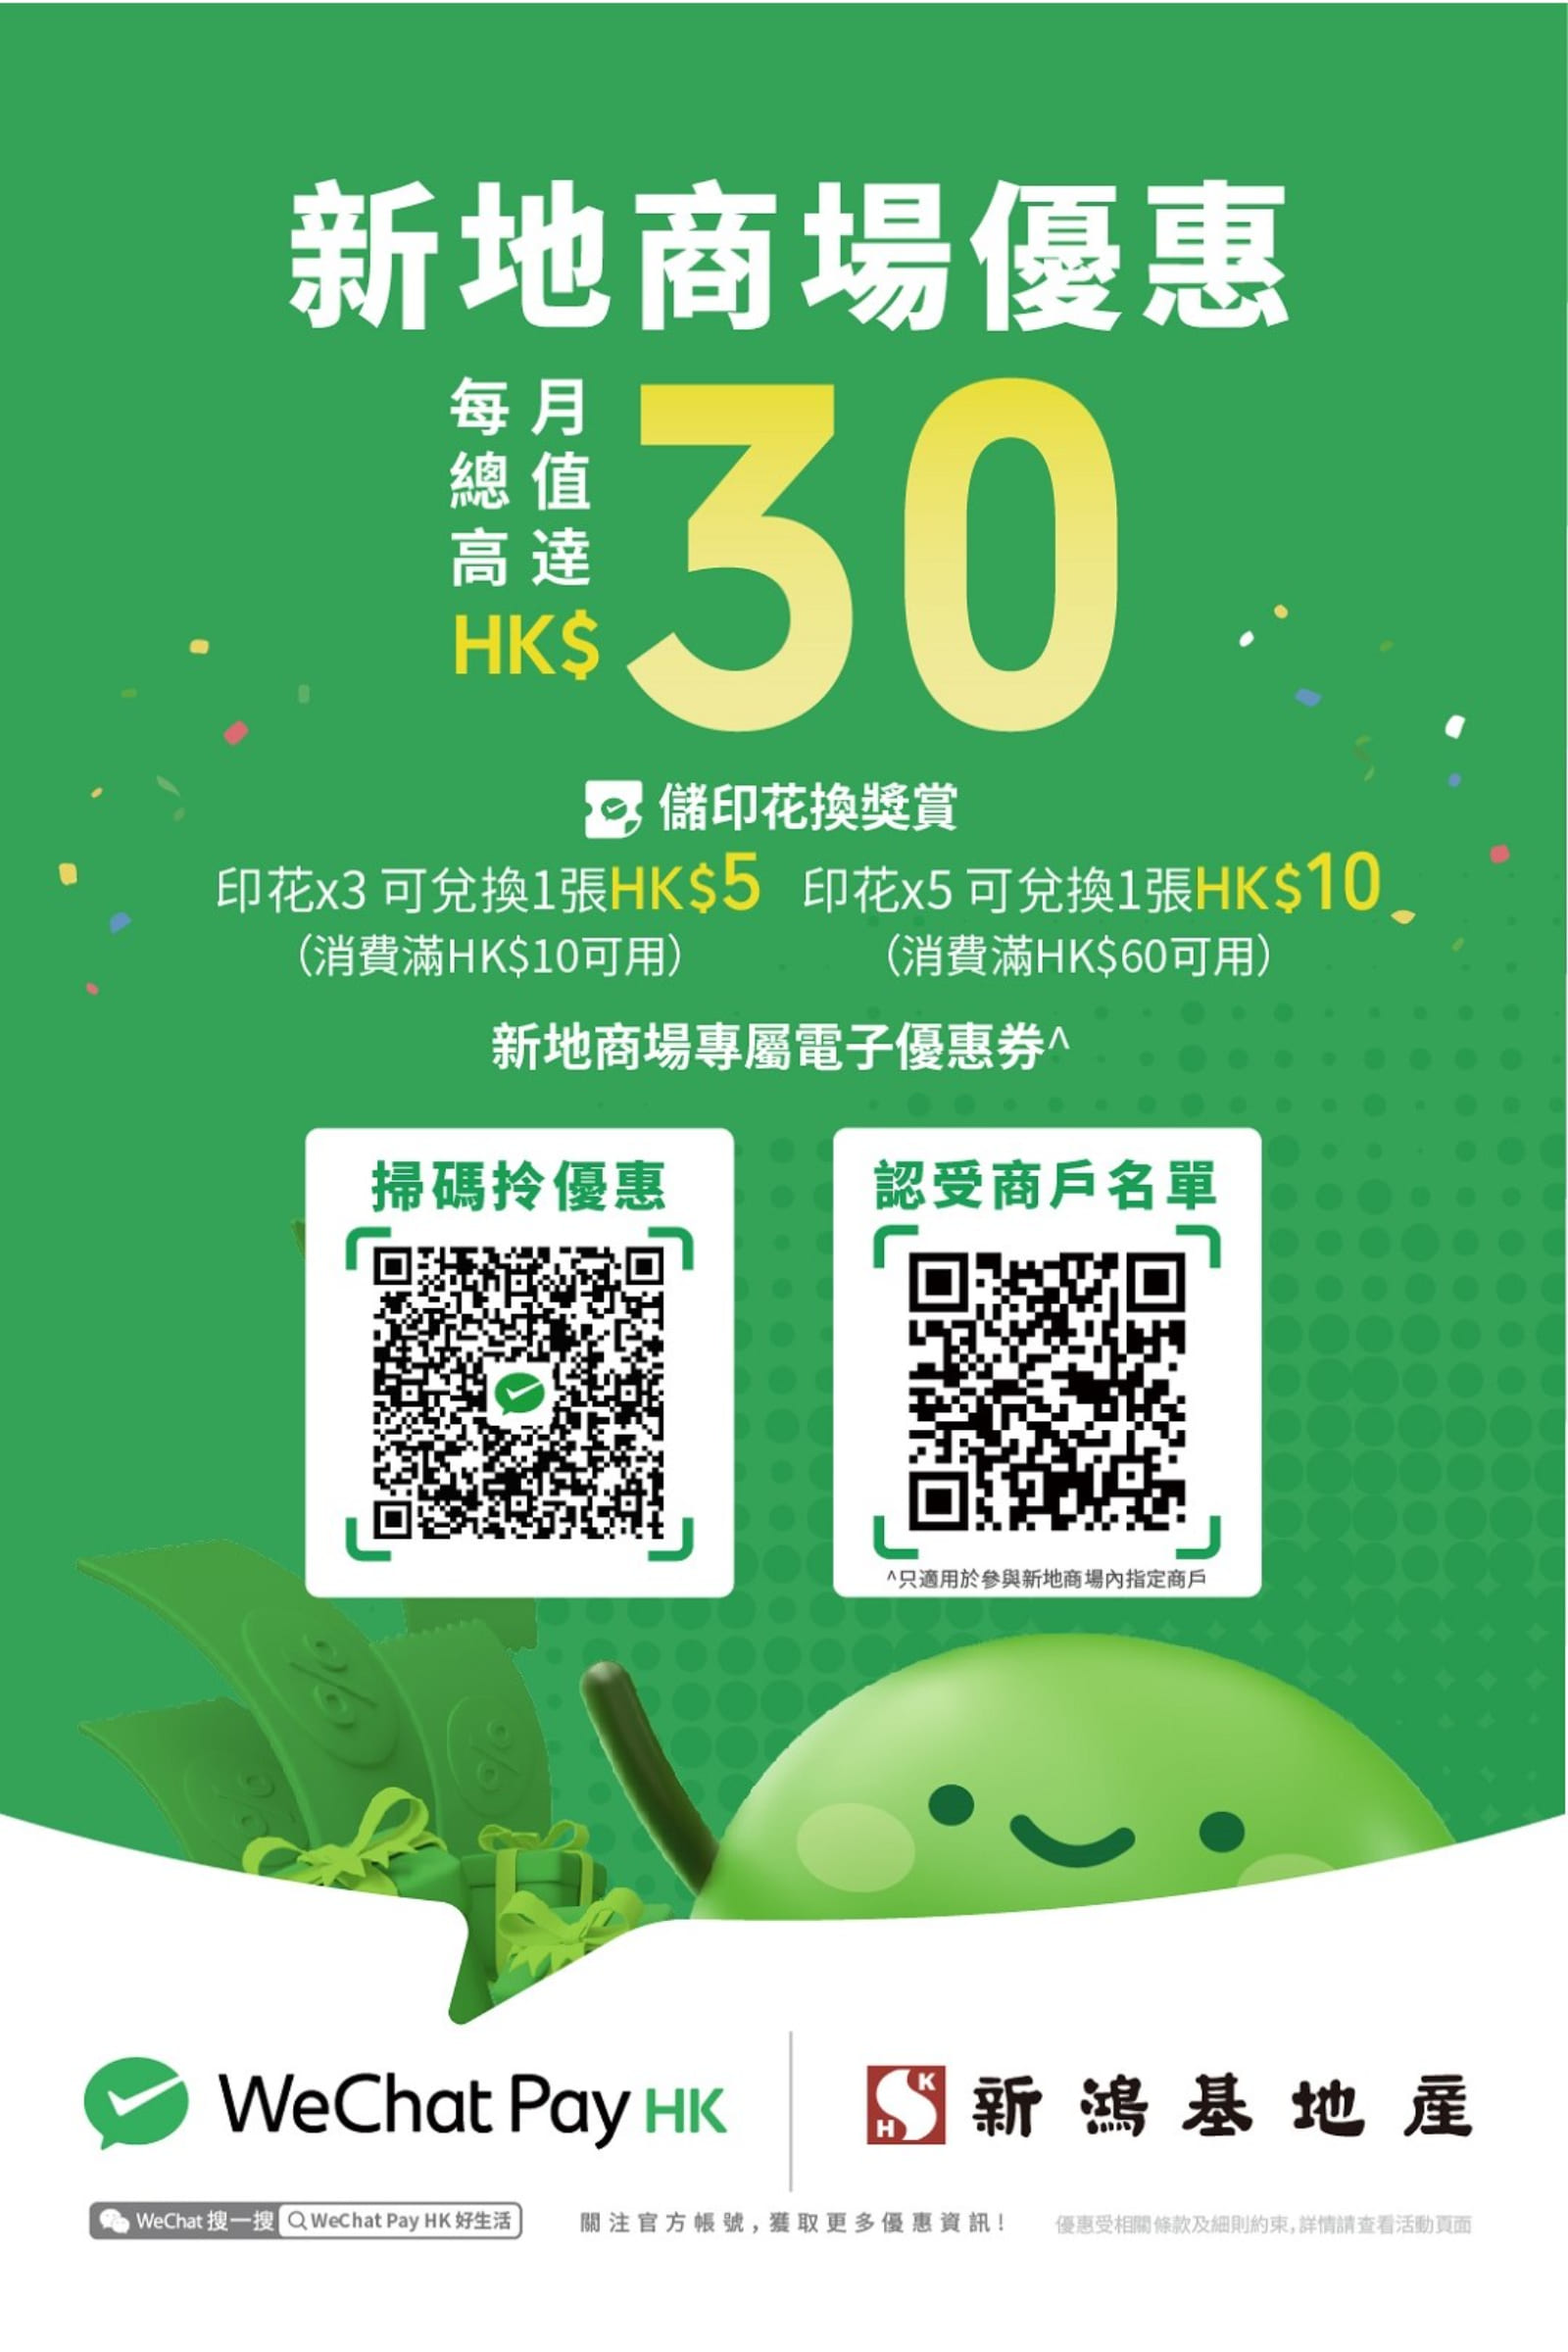 WeChat Pay HK eStamp Promotion